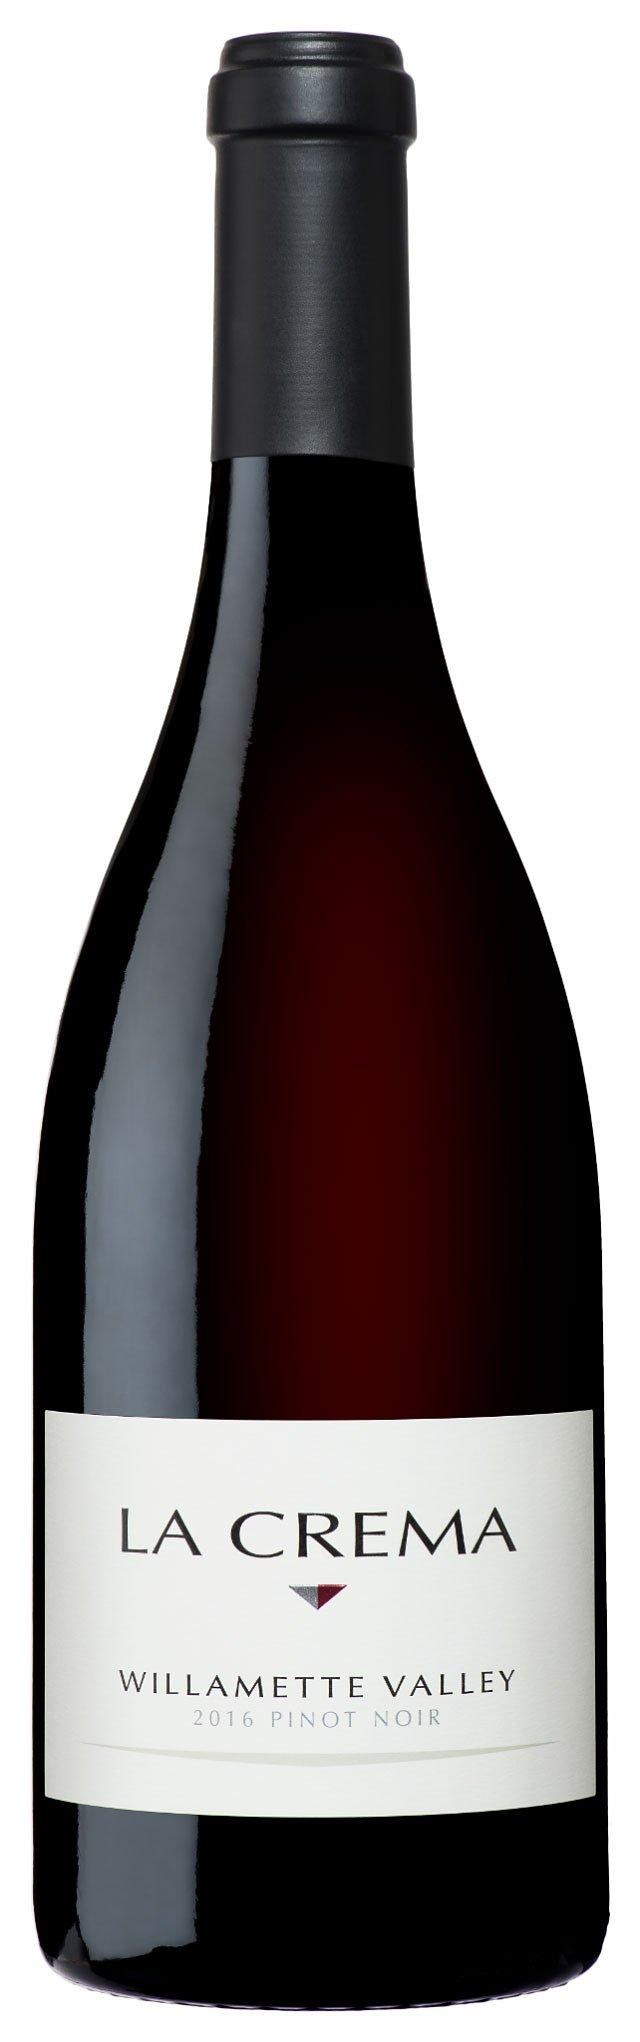 La Crema 2016 Pinot Noir, Willamette Valley